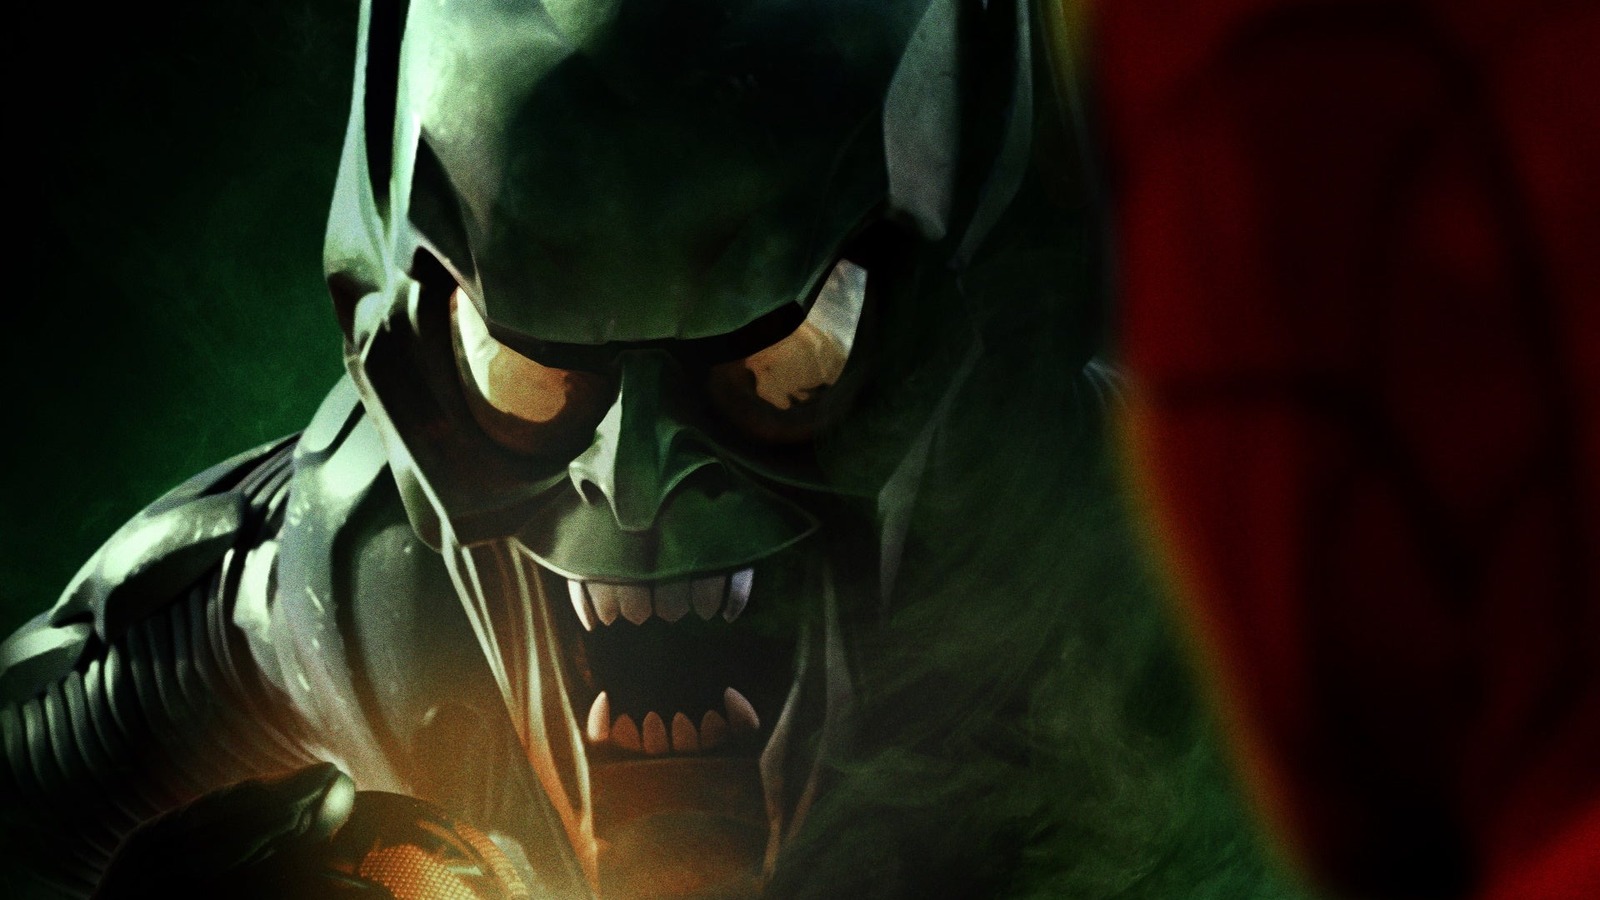 Spider-Man: No Way Home Knows The Greatest Spidey Villain Is Willem Dafoe's Green Goblin